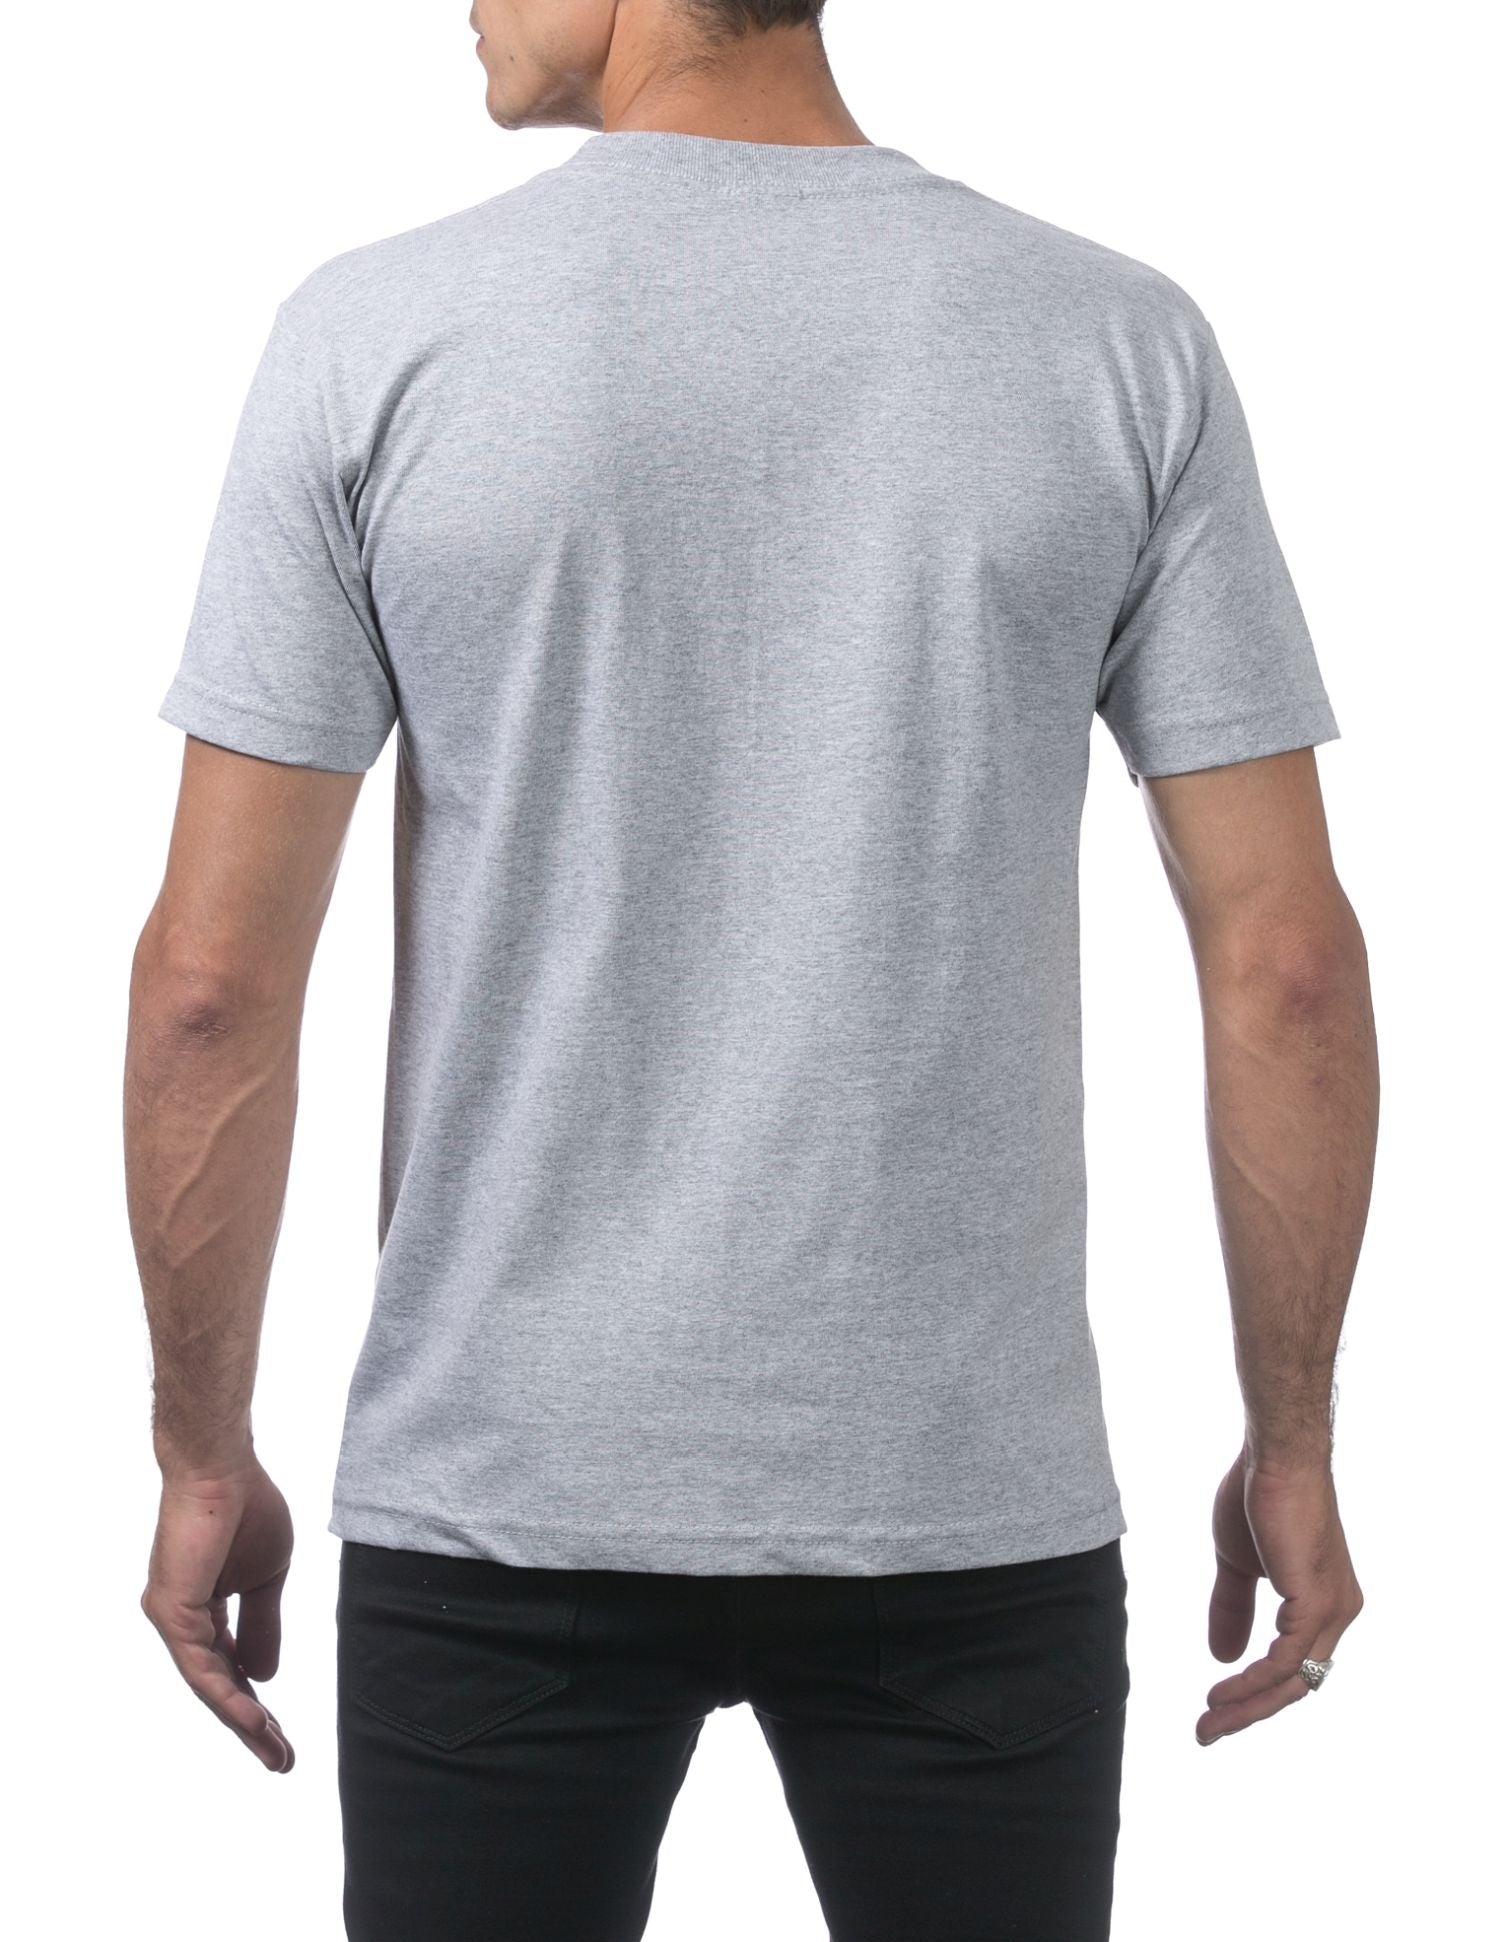 Pro Club Men's Comfort Cotton Short Sleeve T-Shirt - Heather Gray - X-Large - Pro-Distributing